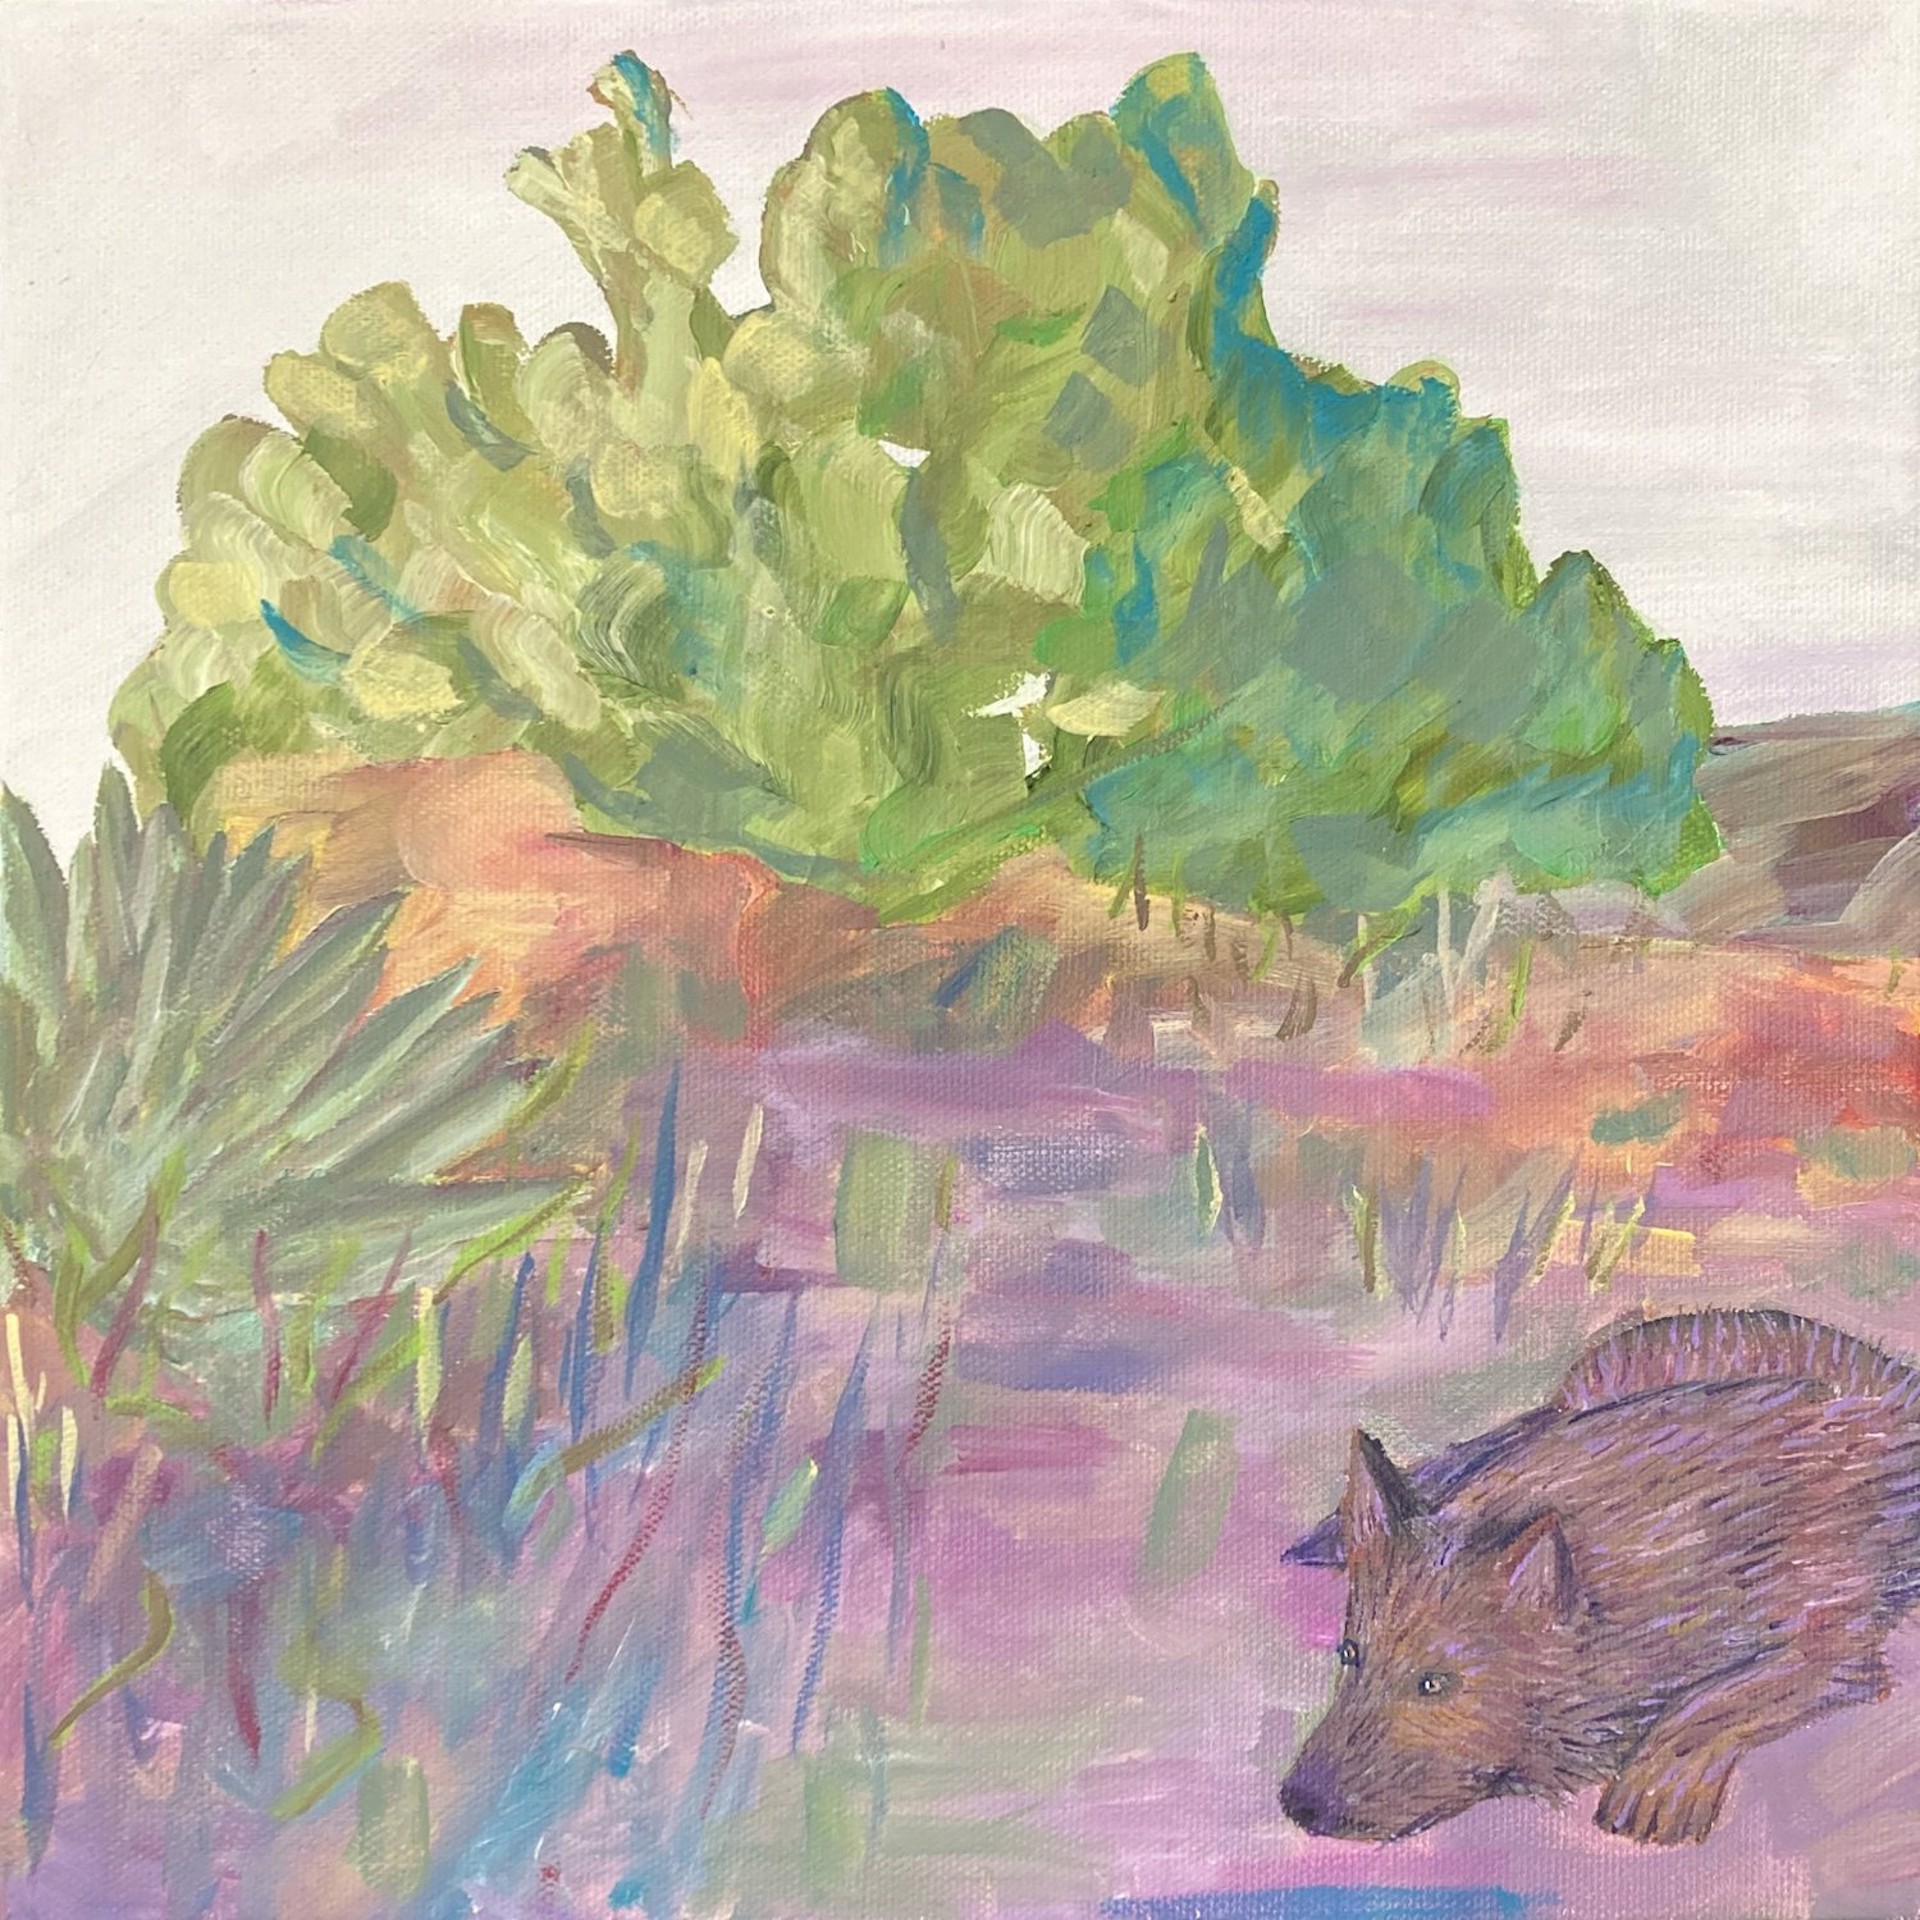 "Sedona Dog" by Anna Krieg by Art One Foundation